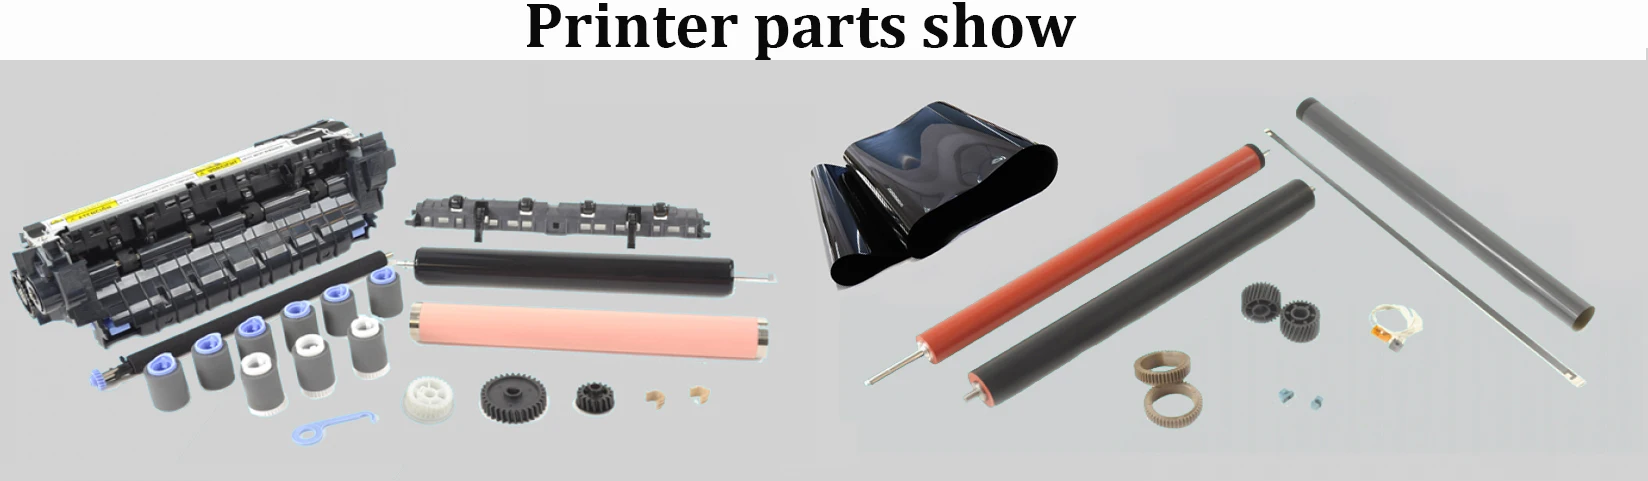 printer parts show.jpg